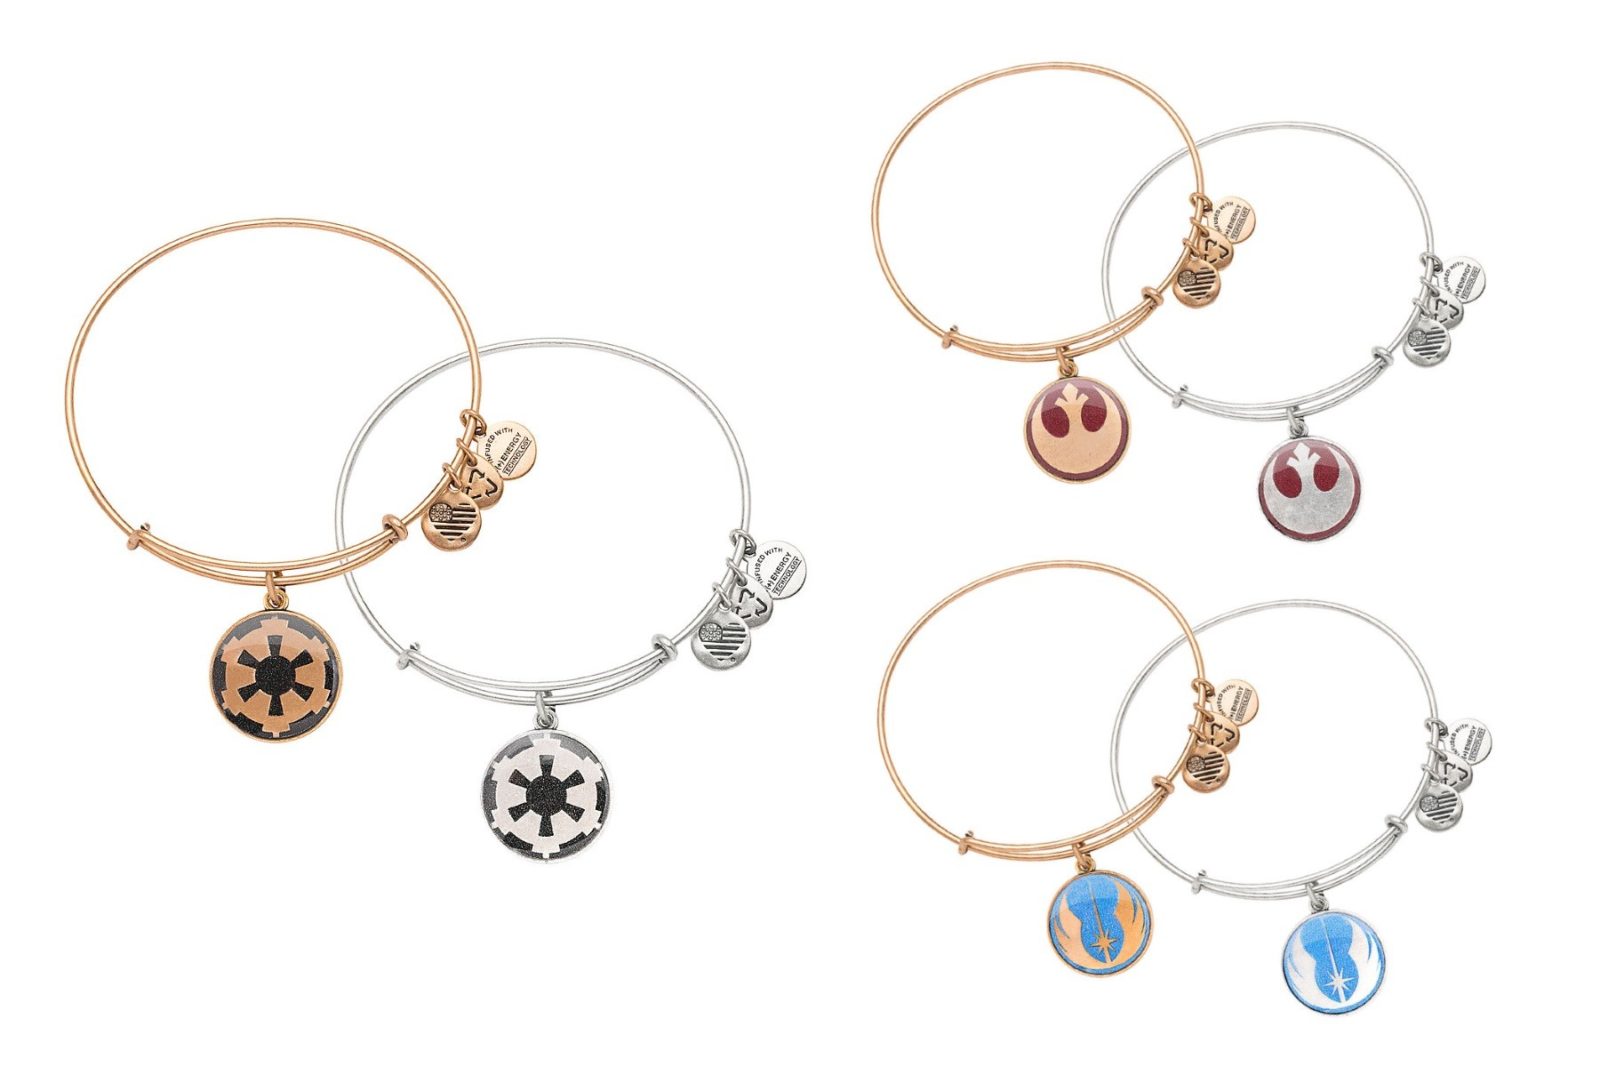 Alex And Ani x Star Wars Imperial Jedi Order Rebel Alliance symbol expandable charm bangle bracelets at Disney Store